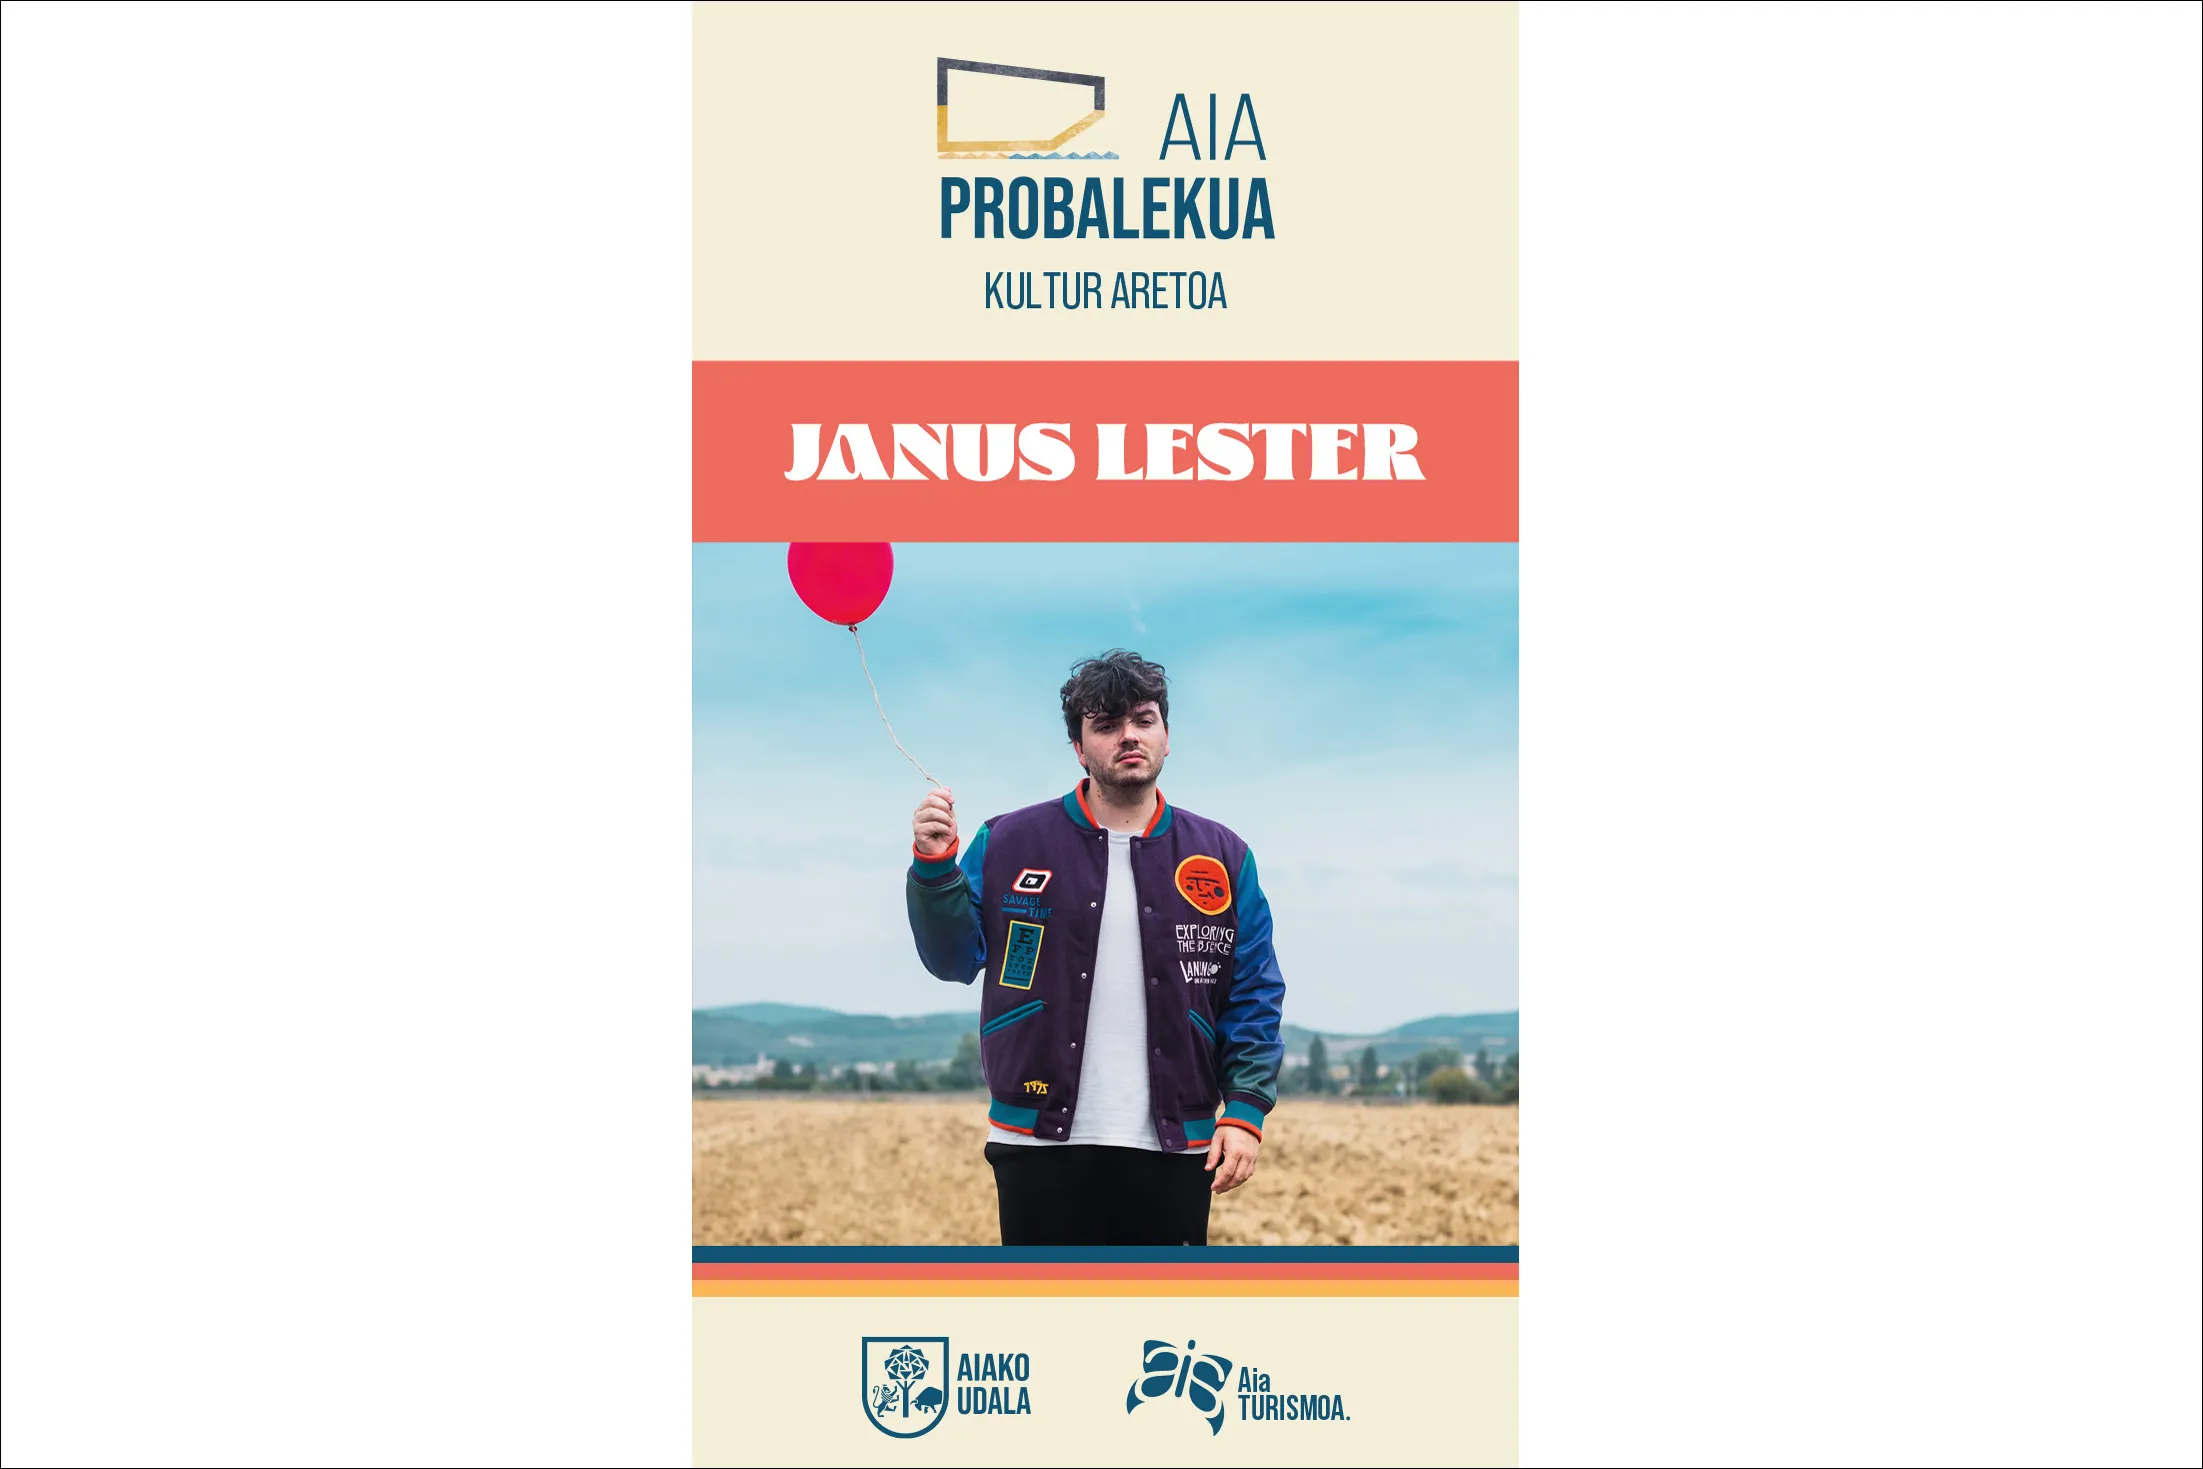 Janus Lester